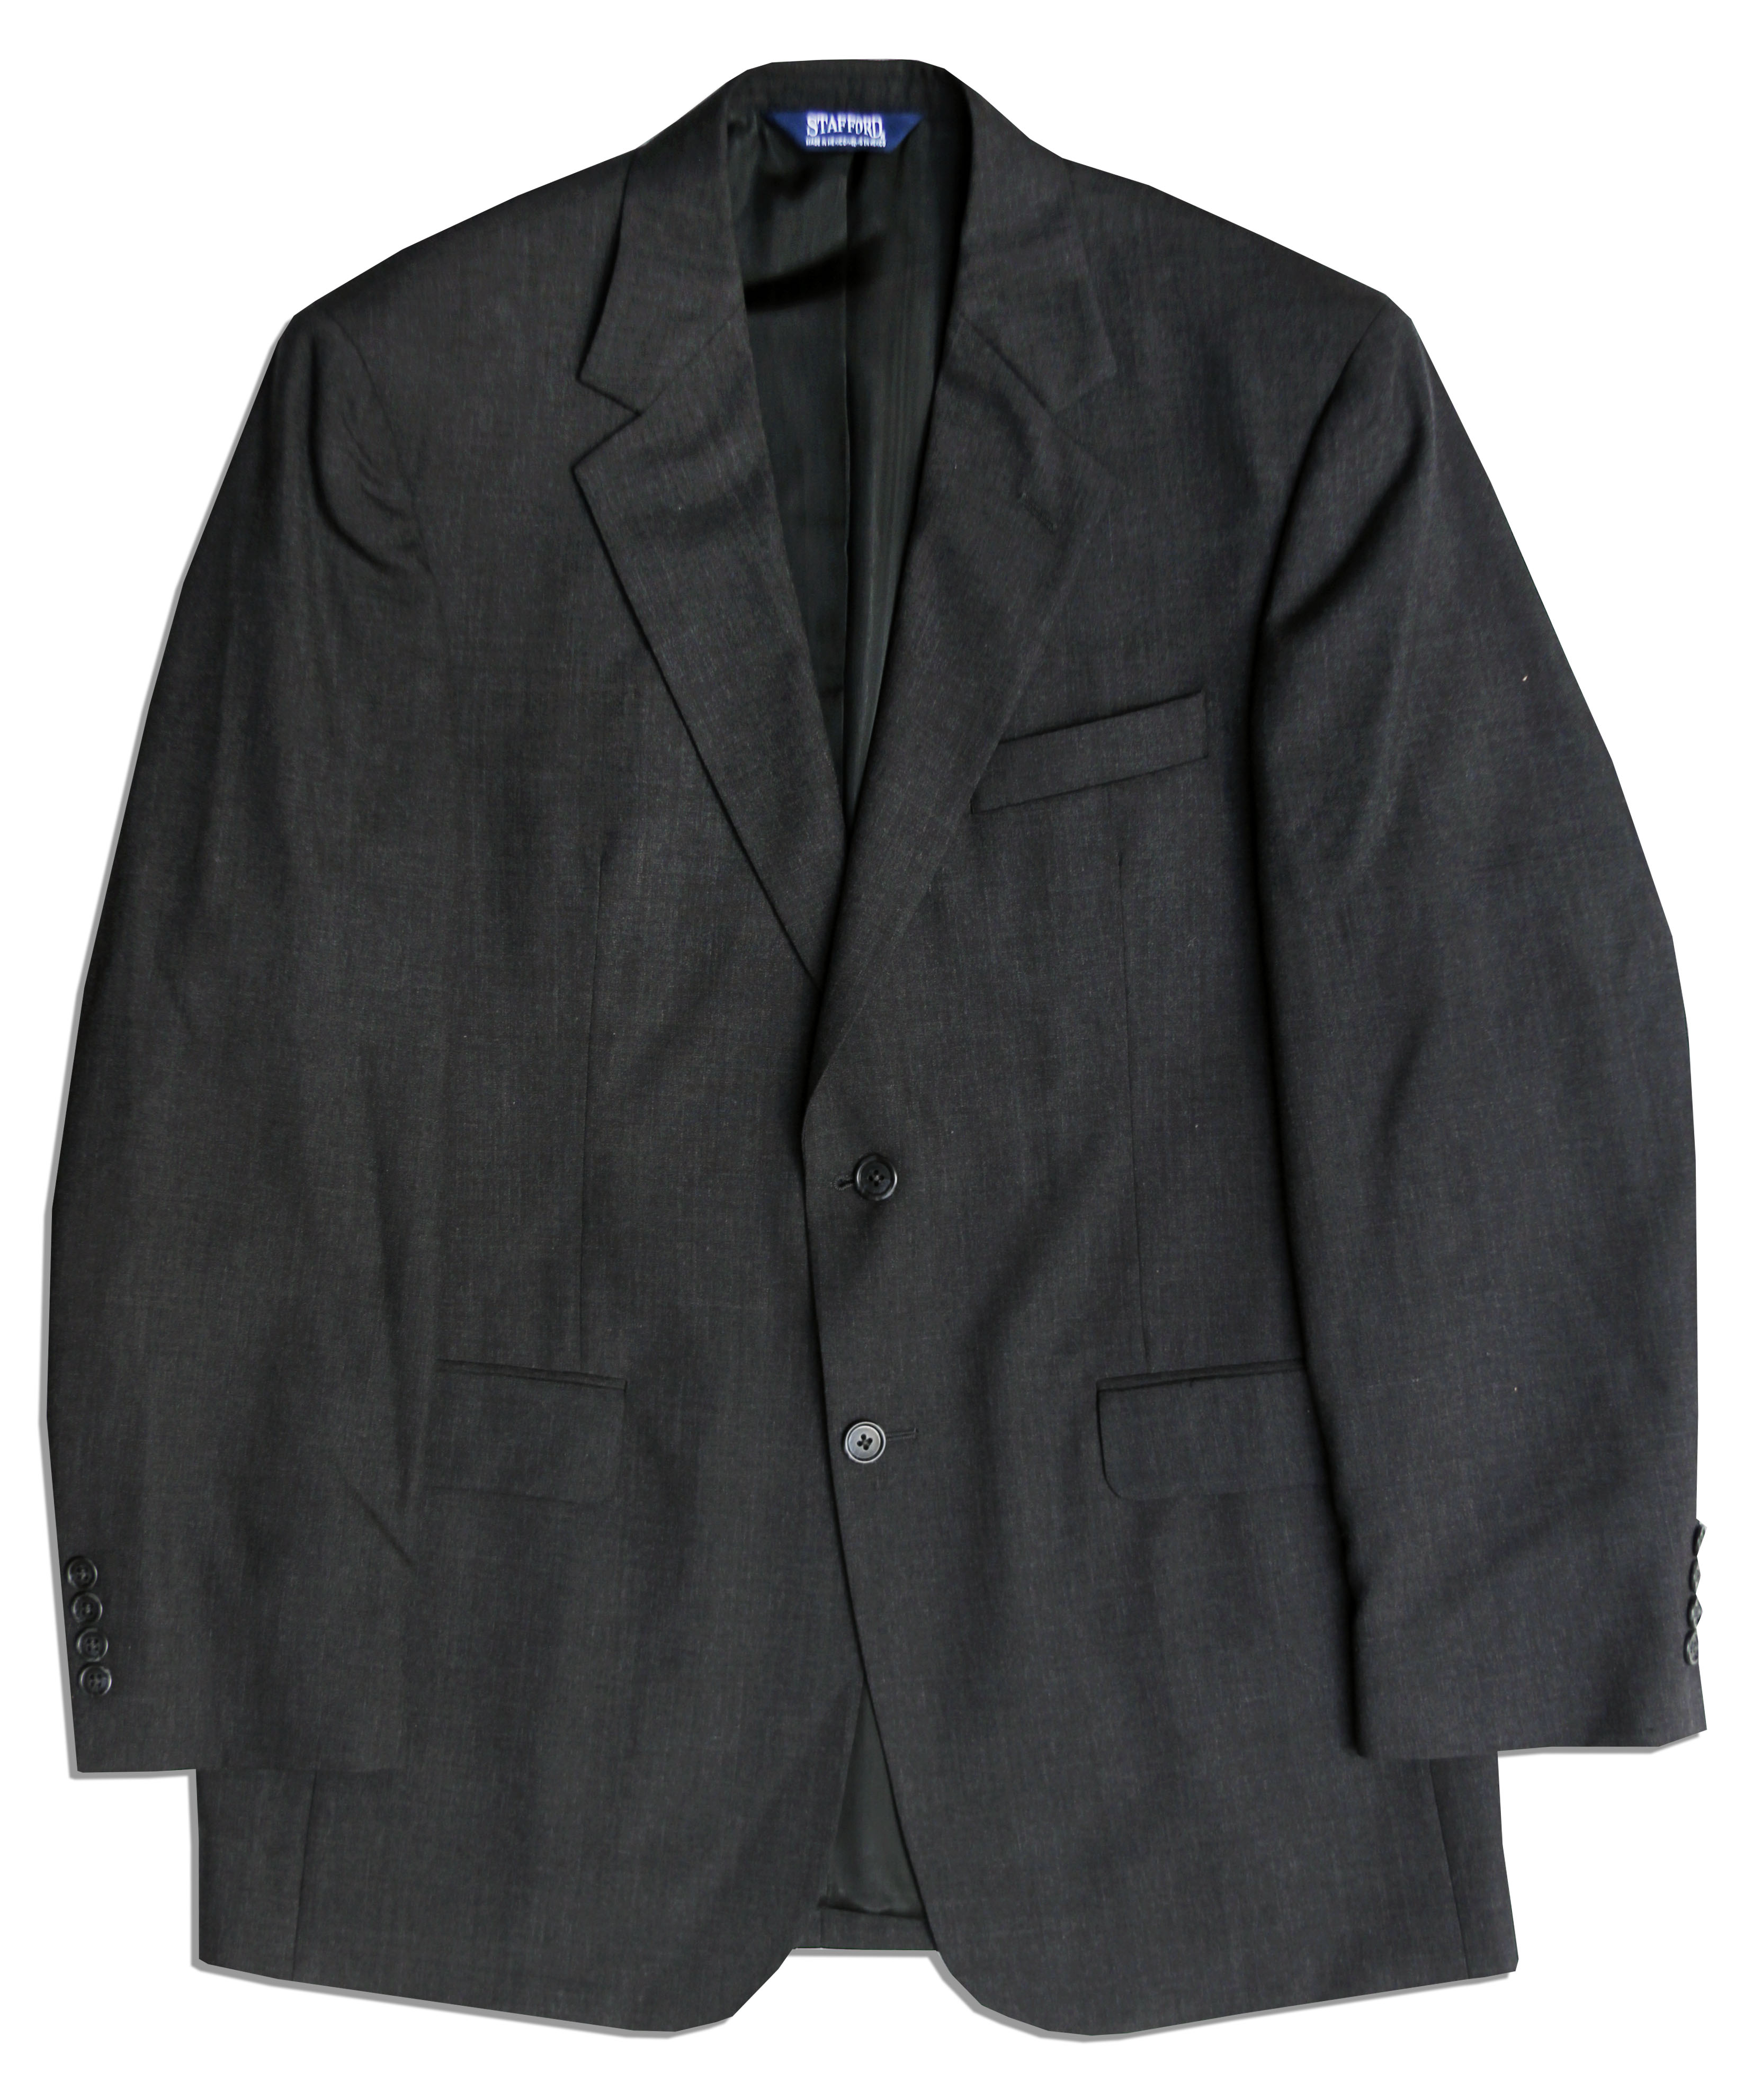 Item Detail - Steve Carell Screen-Worn Business Suit Jacket, Shirts ...